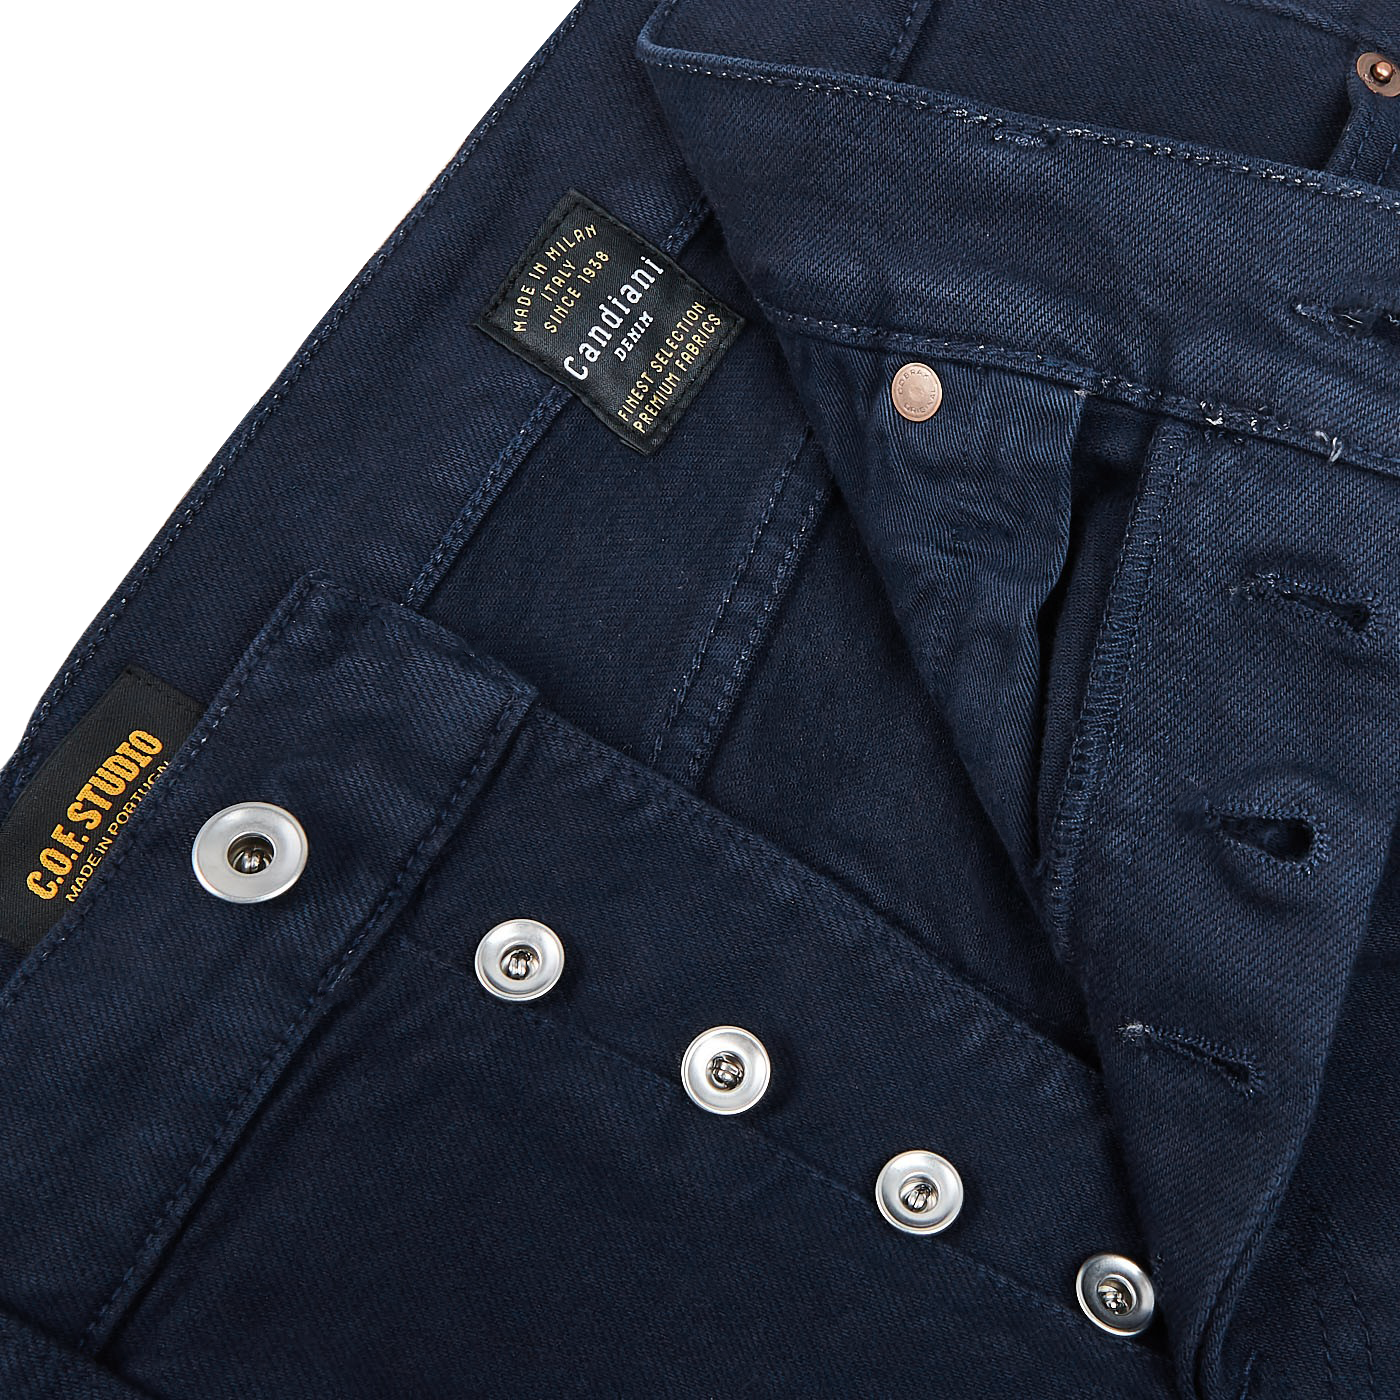 C.O.F Studio Navy Blue Candiani Cotton M7 Jeans Zipper